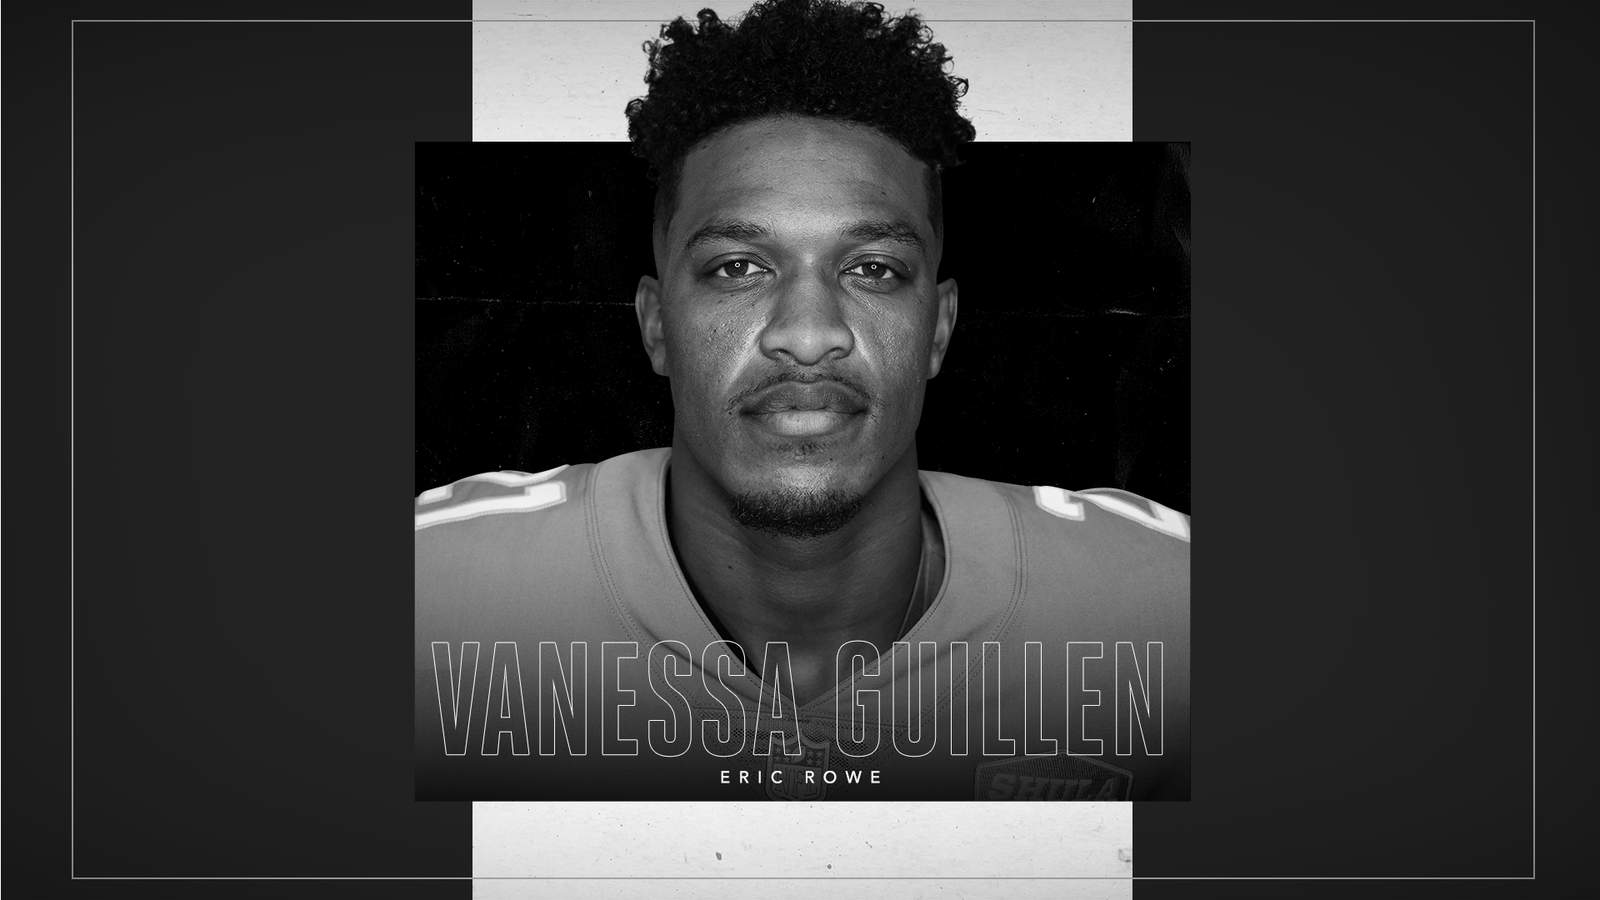 NFL player will wear Vanessa Guillen’s name on helmet for Sunday’s game